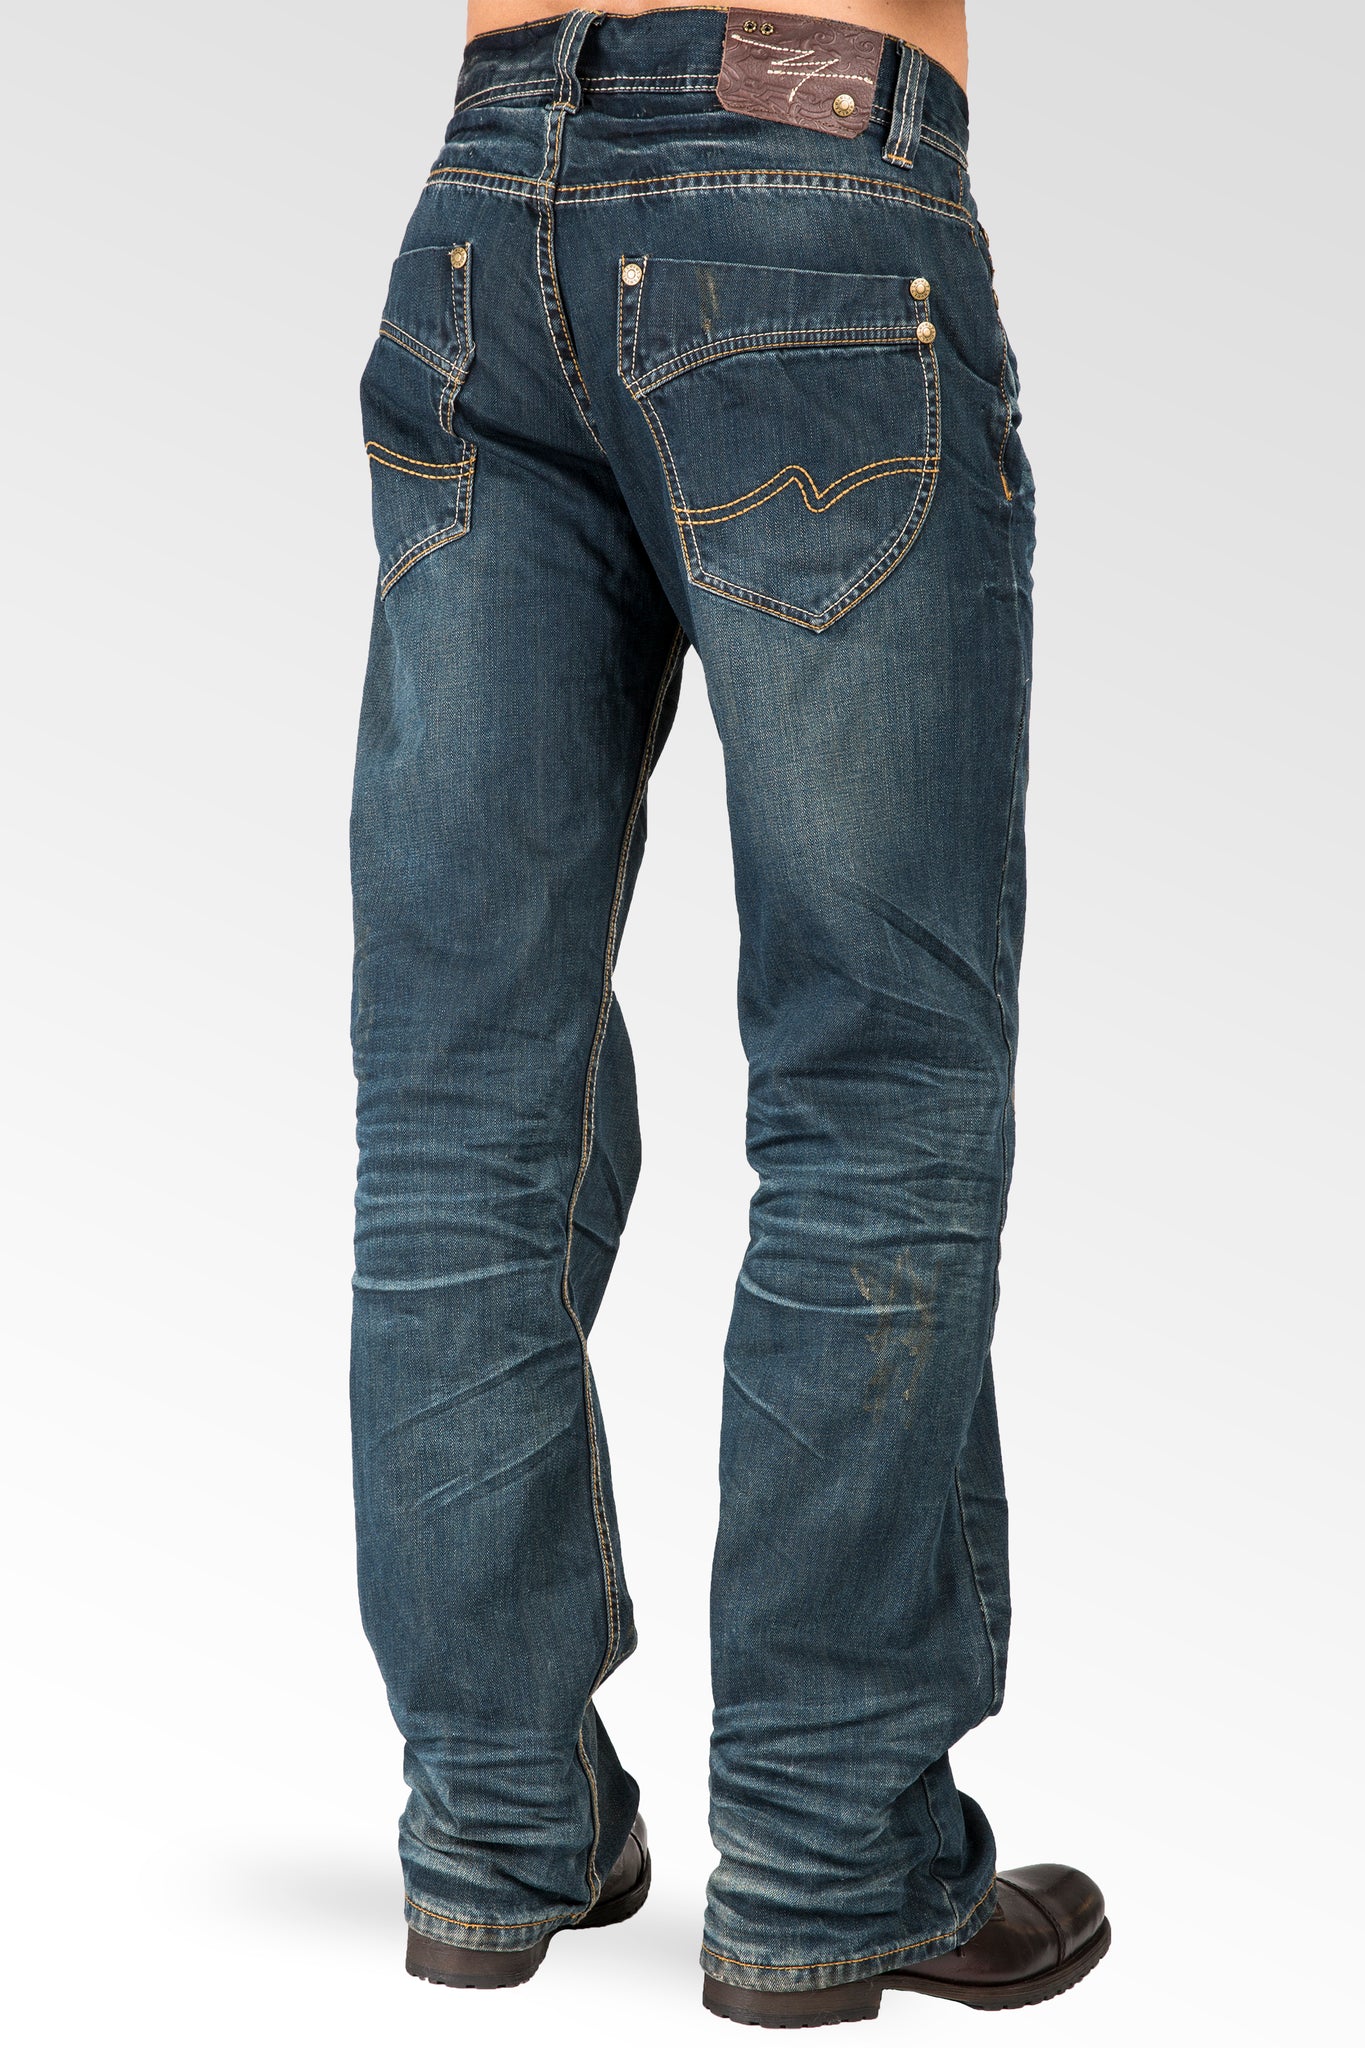 Midrise Relaxed Bootcut Blue Premium Denim 5 pocket Jeans Vintage Wash & Whiskering